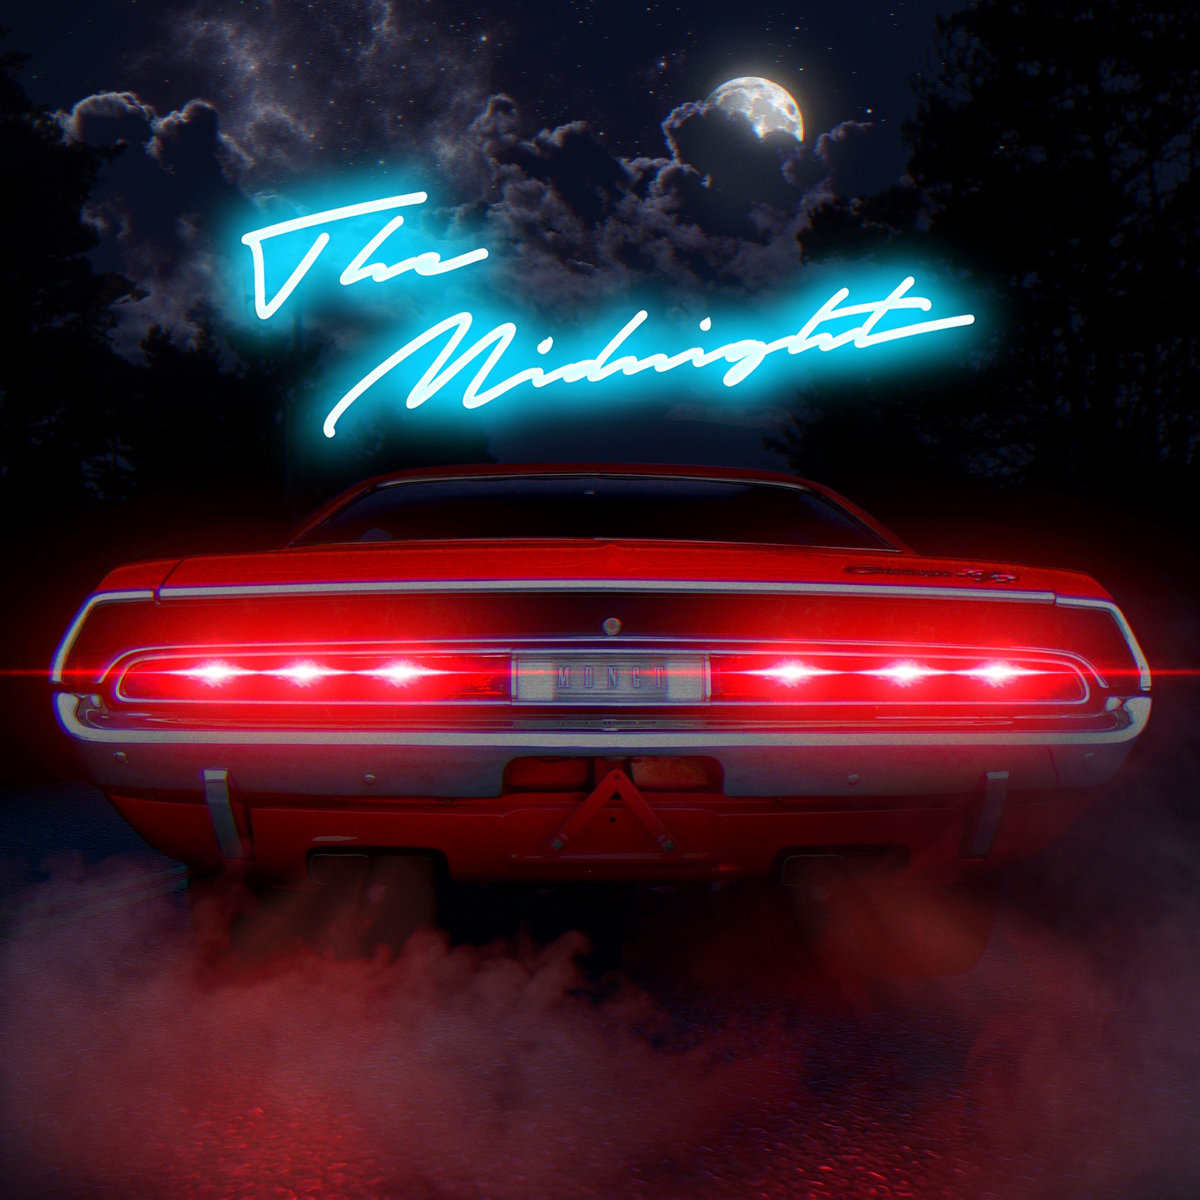 The Midnight Days of Thunder cover artwork